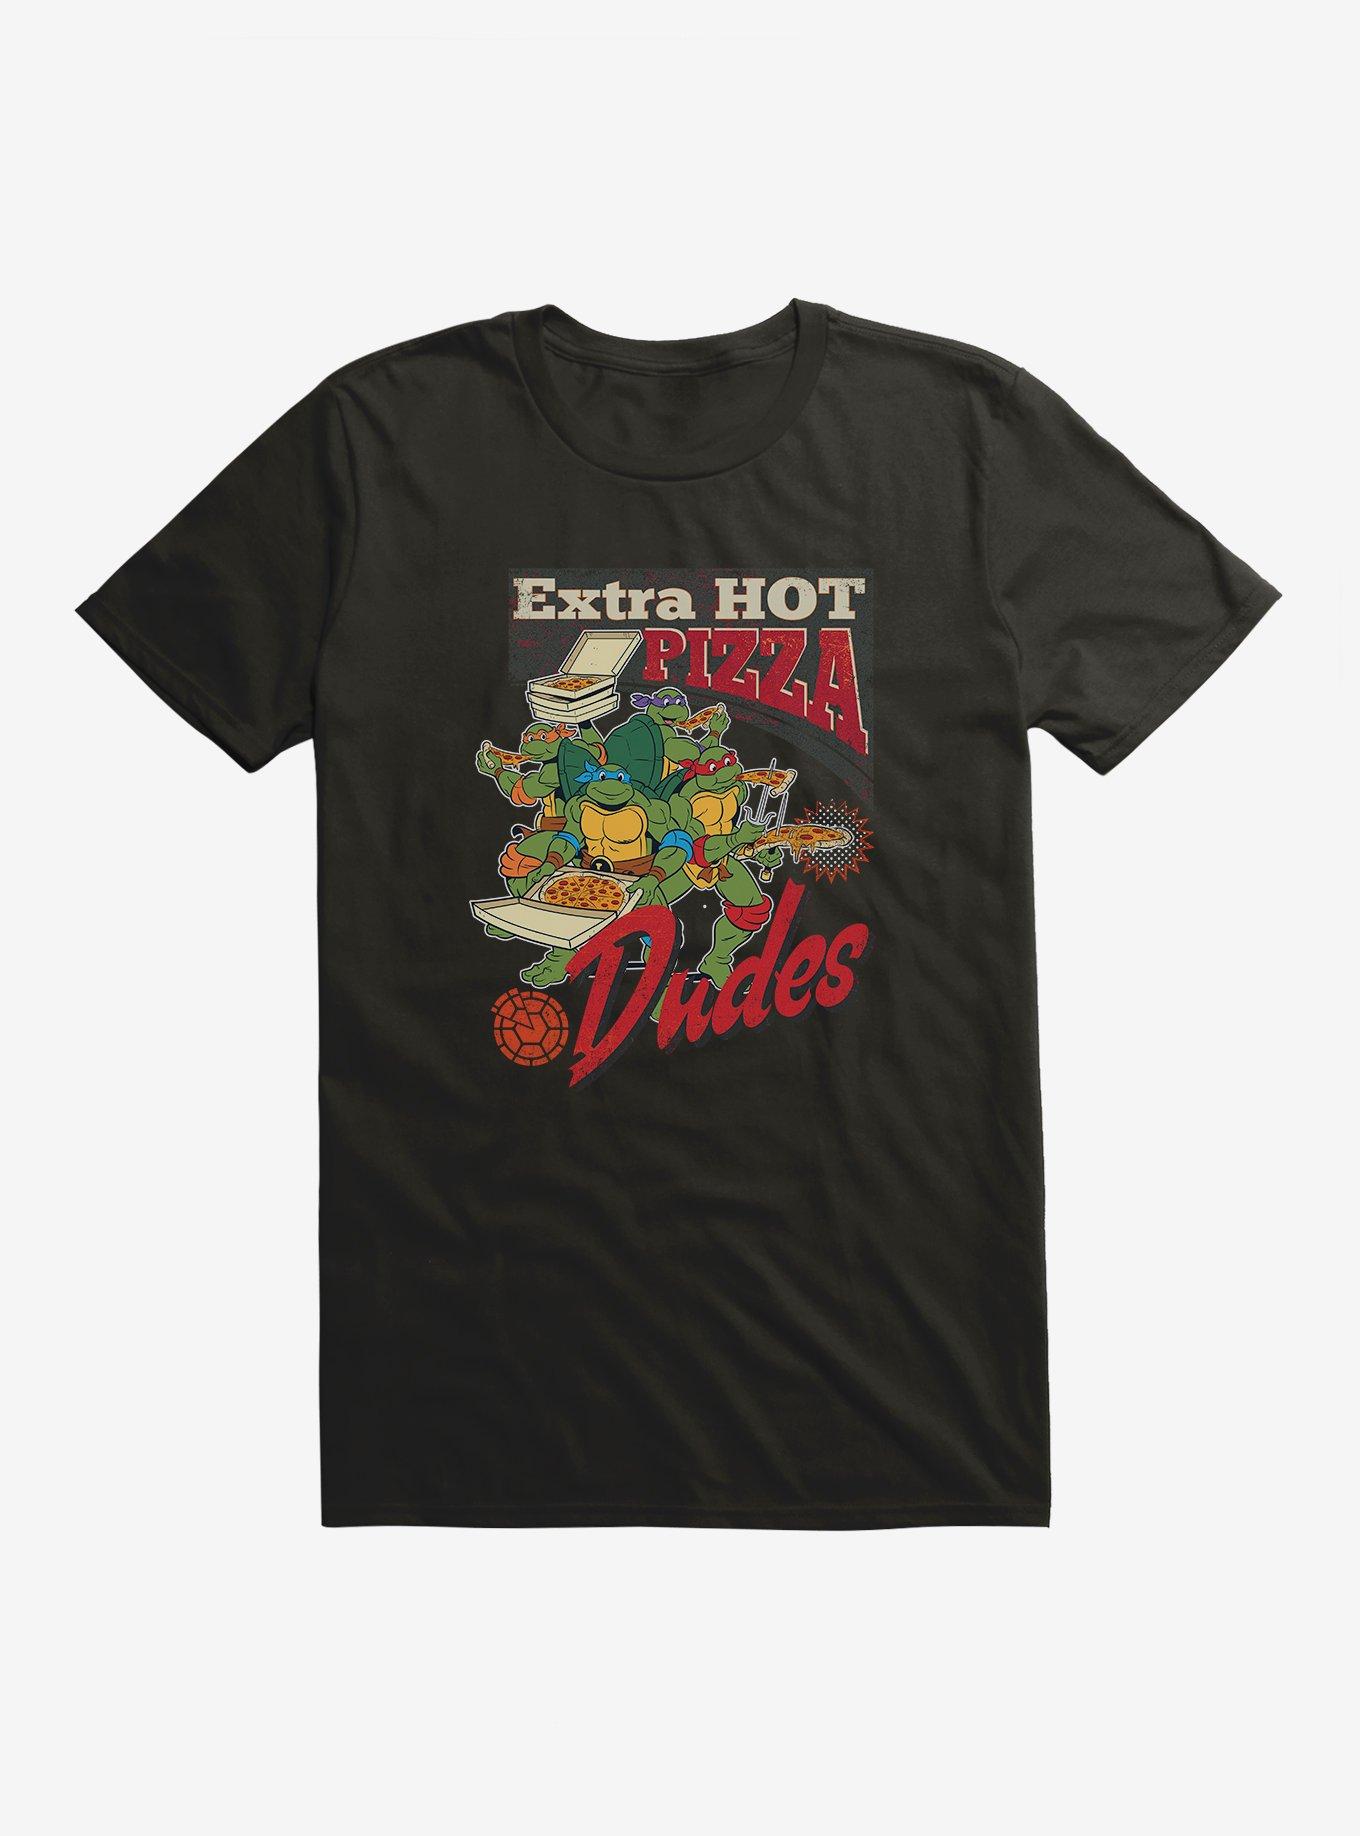 Teenage mutant ninja turtles pizza for christmas t shirt t shirt